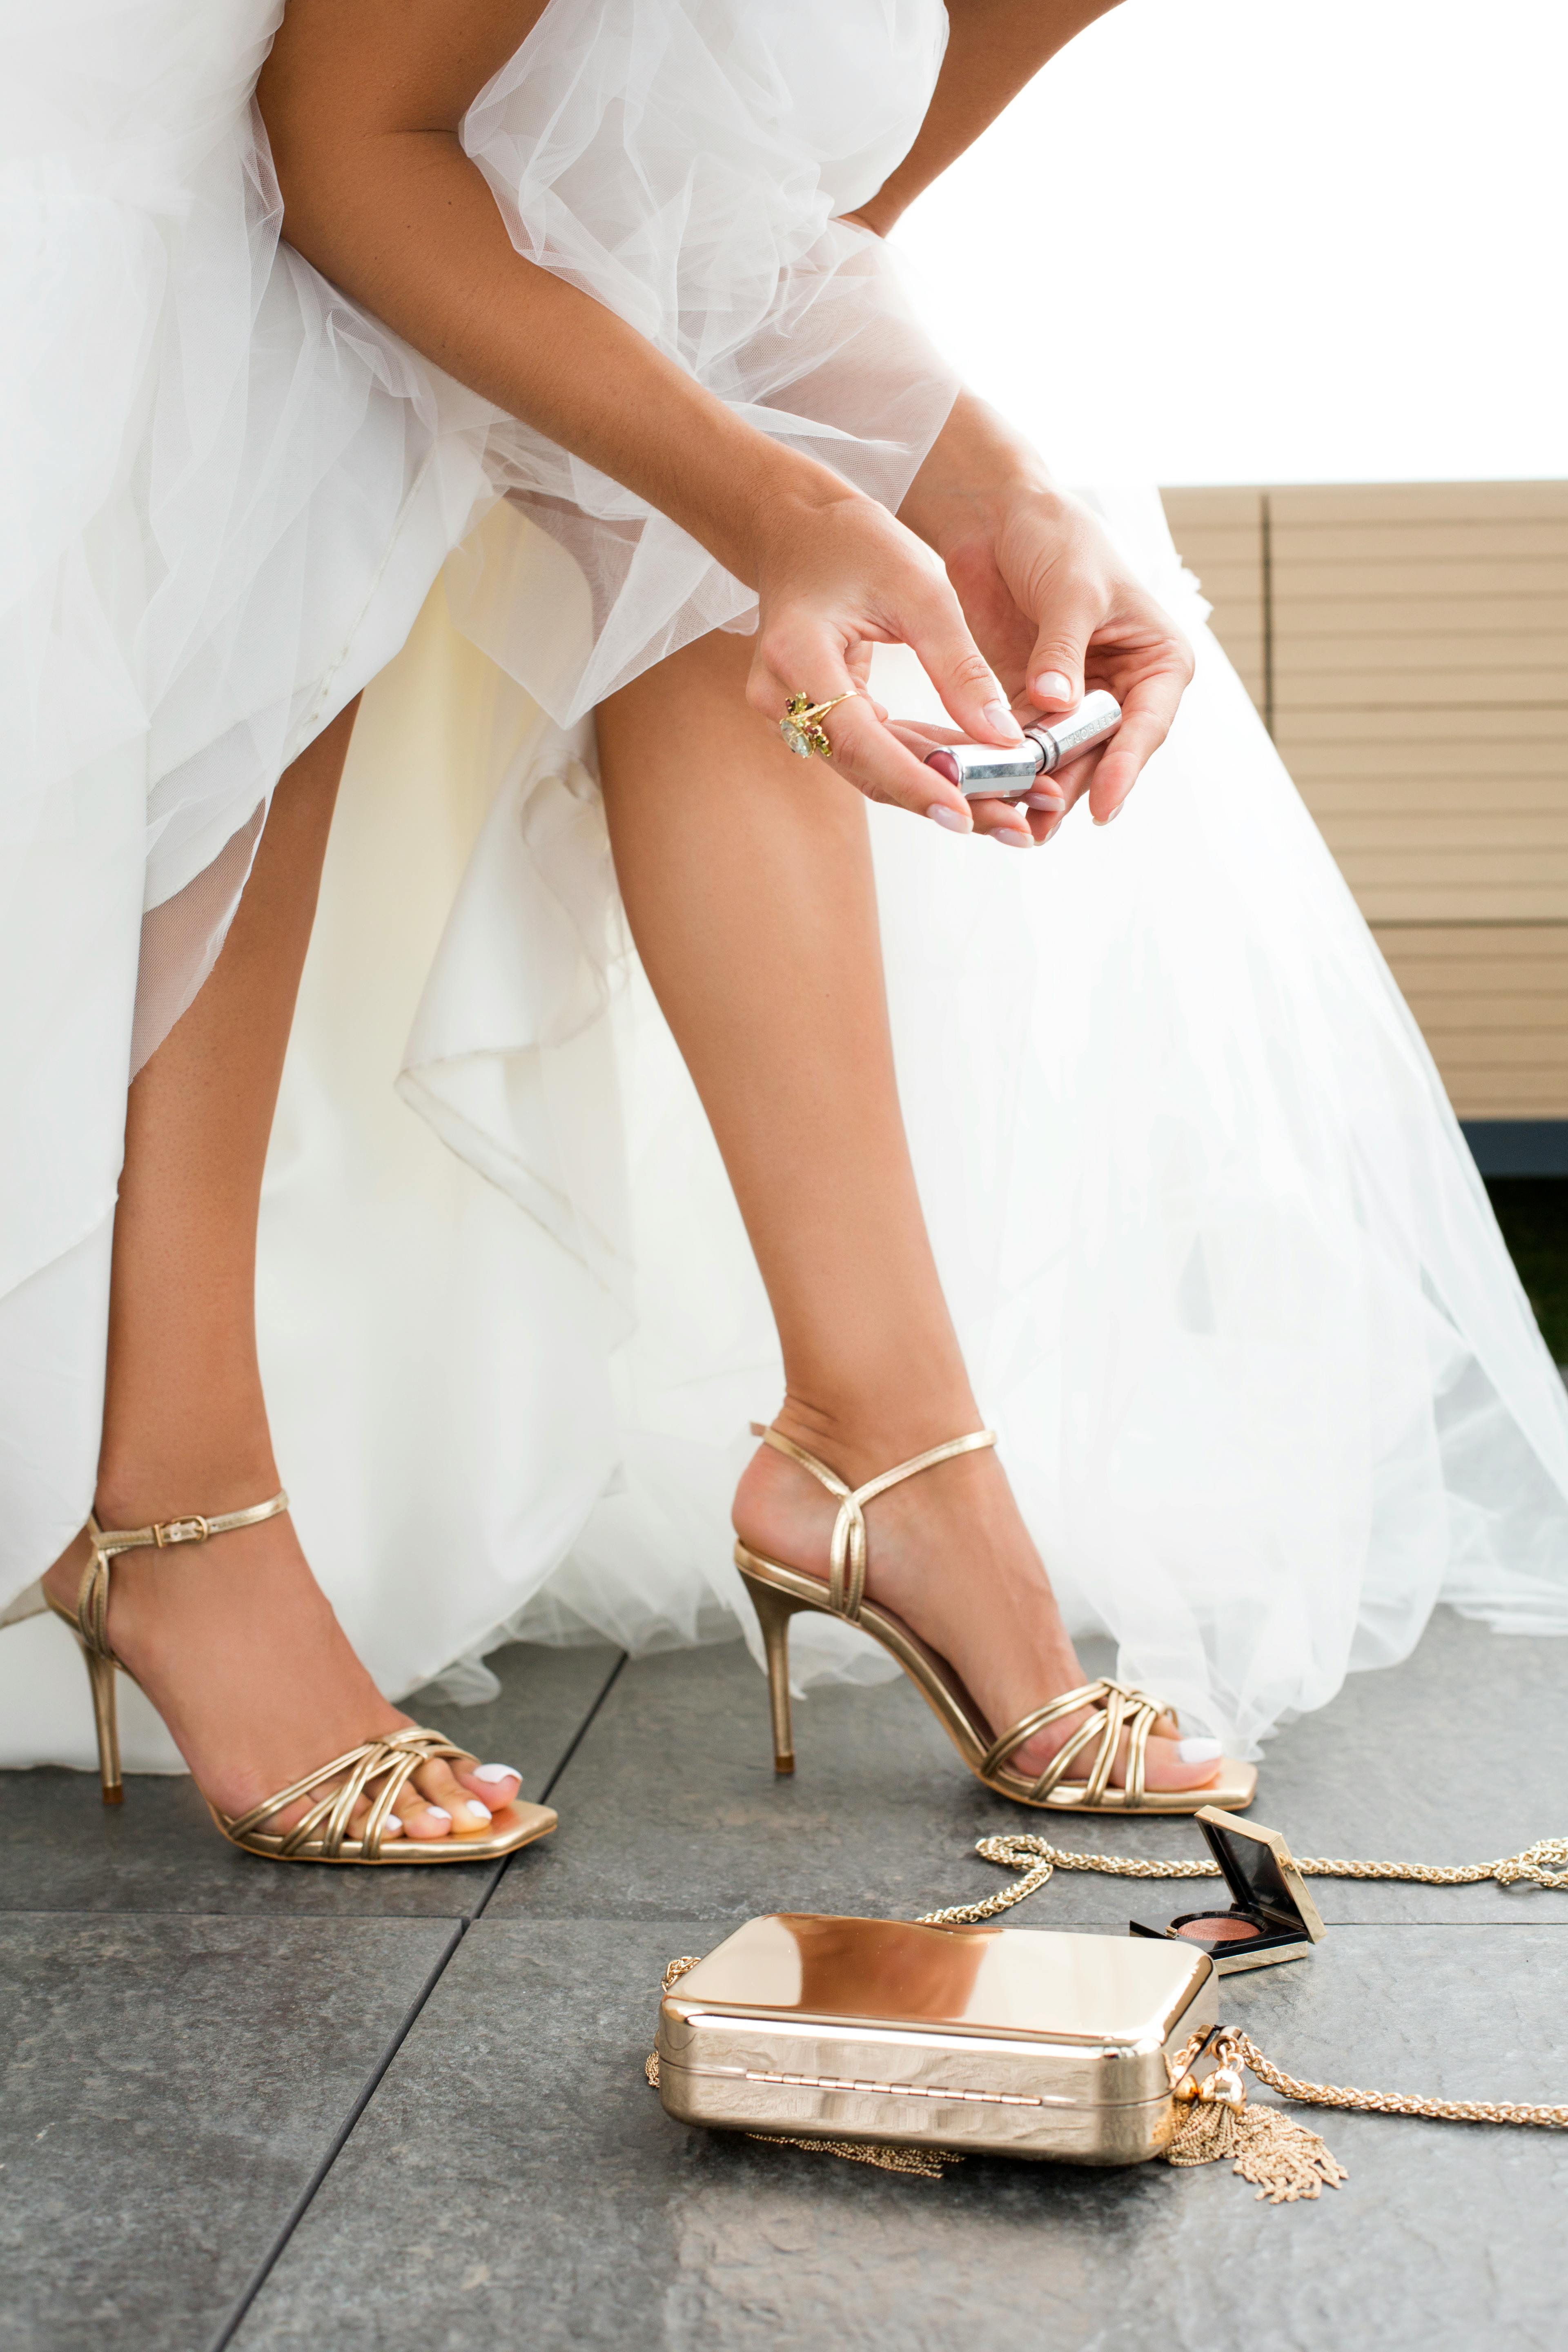 crop bride with makeup tools before wedding ceremony